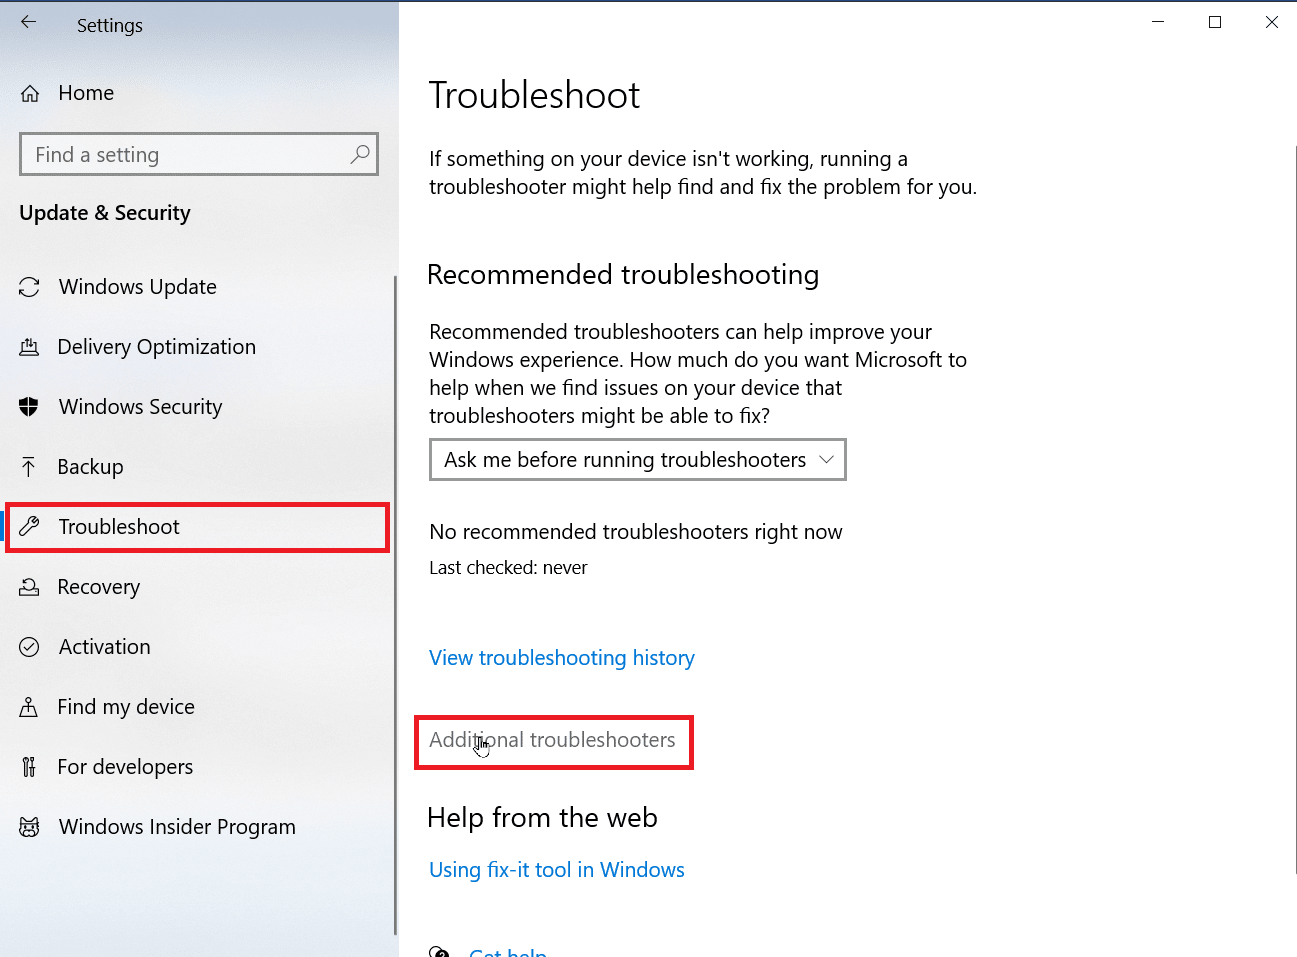 troubleshoot pane တွင် Additional troubleshooter ကိုနှိပ်ပါ။ Microsoft IPP Class Driver သည် အရောင်မရှိ၊ Greyscale သာ ပေးဆောင်သည်။